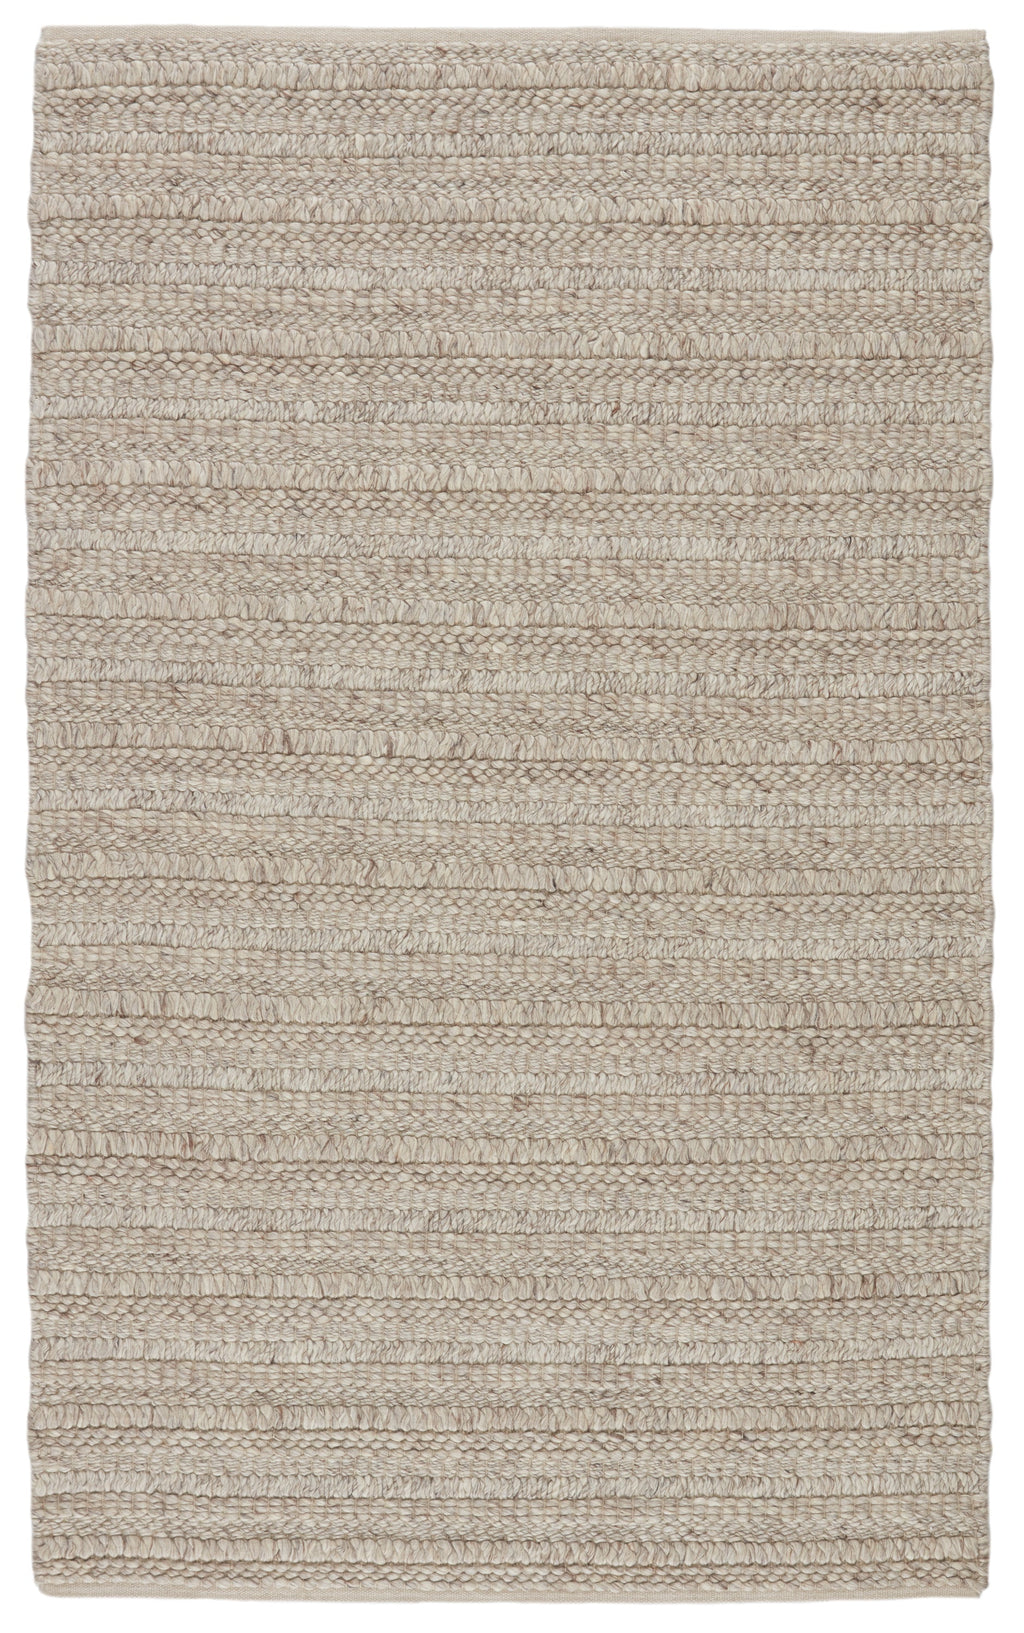 nebula handmade solid beige cream area rug by jaipur living 1